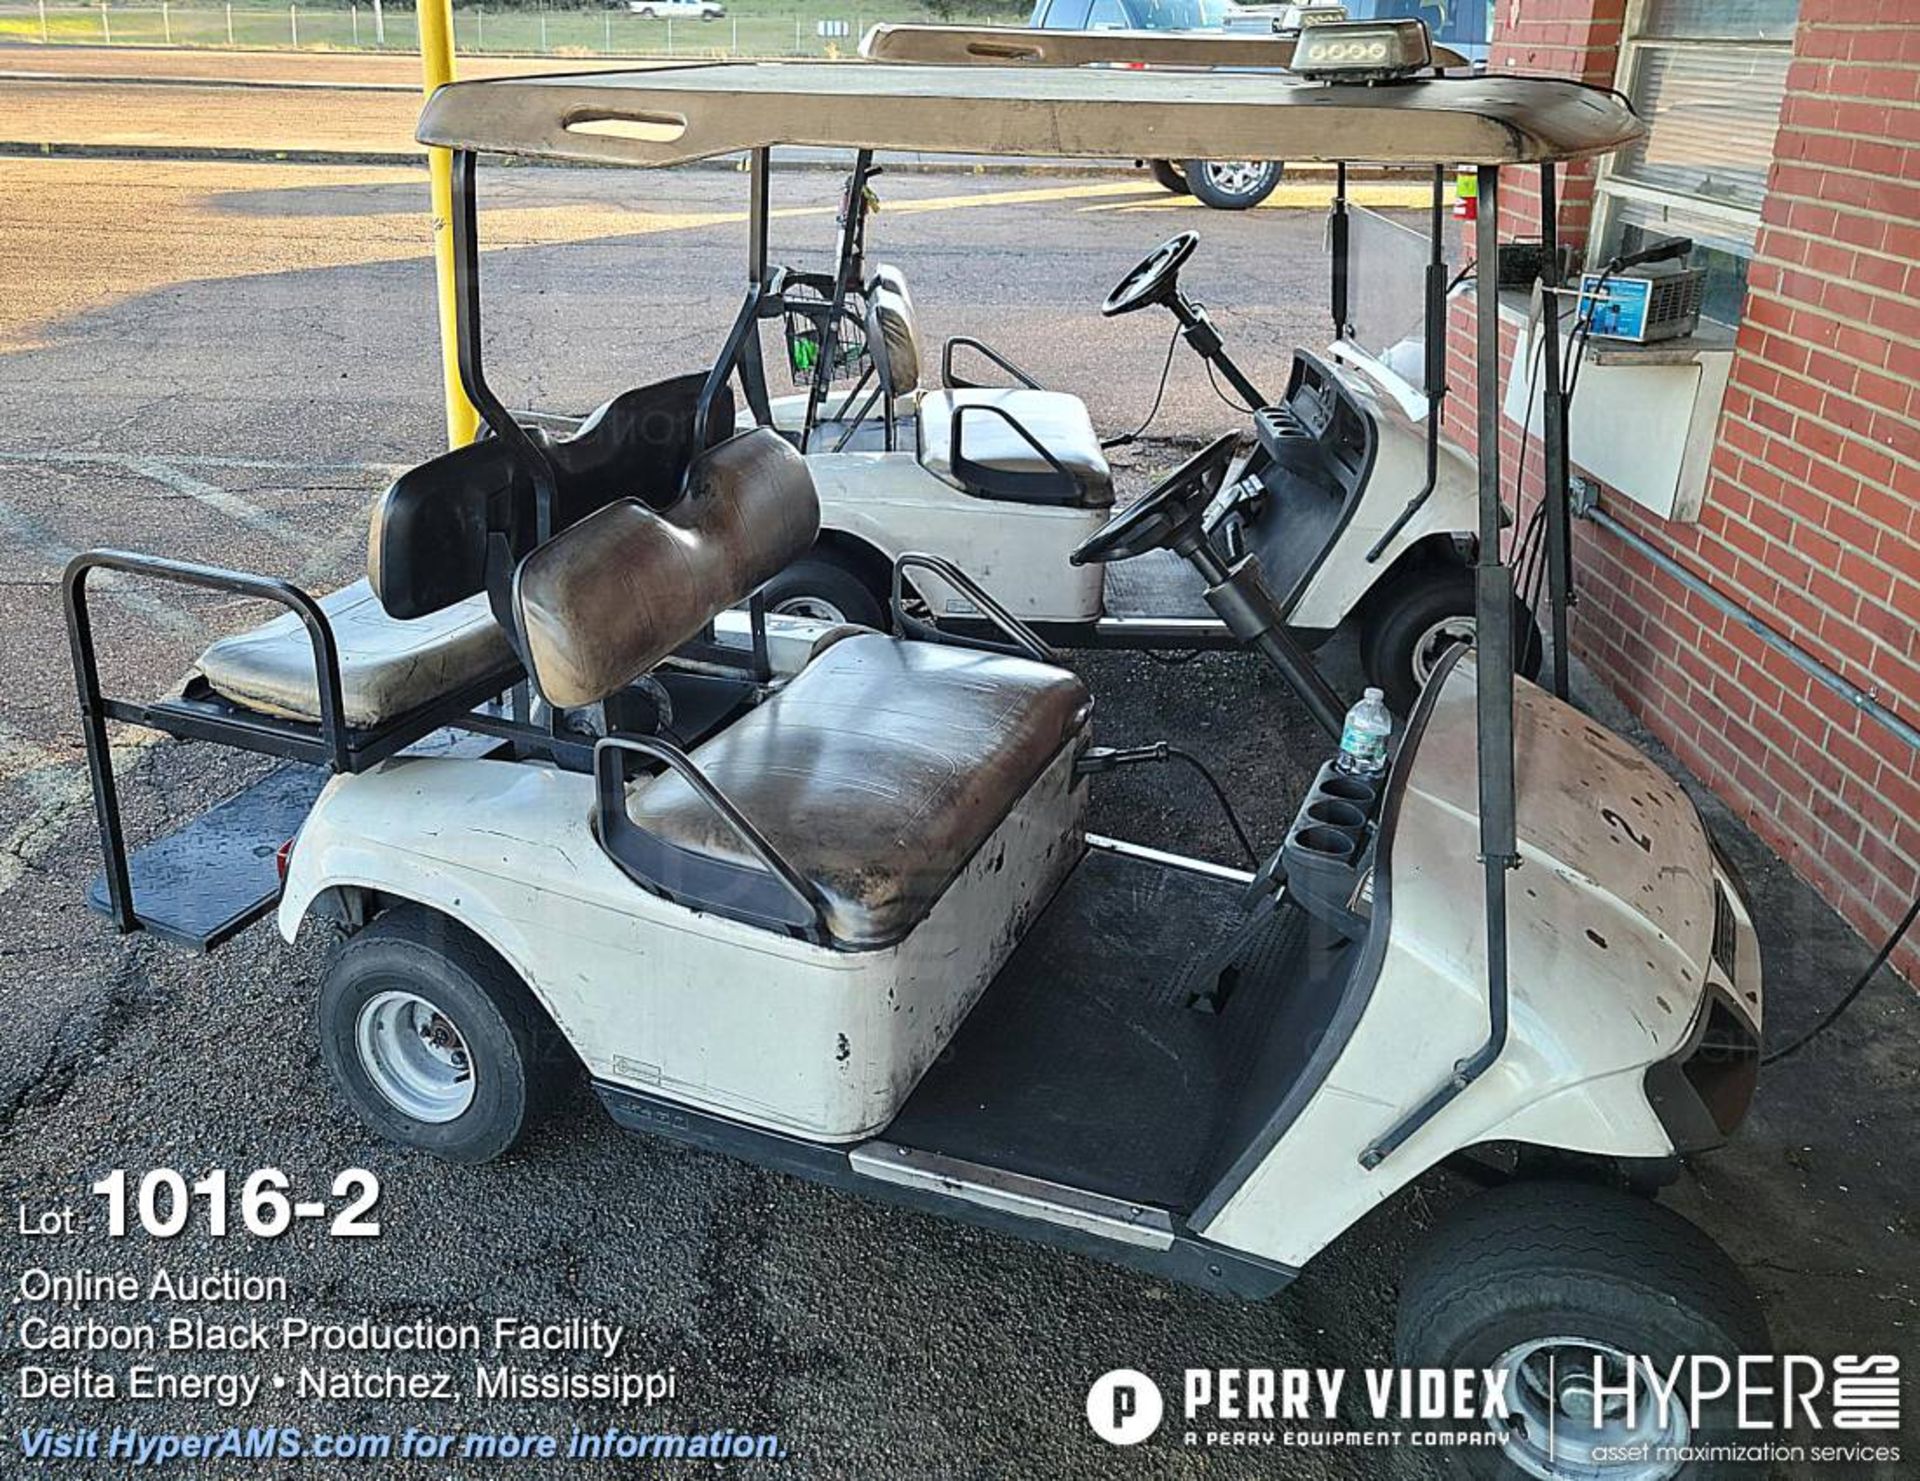 EZ Go Electric golf cart, SN 2692029, 2020 - Image 2 of 4